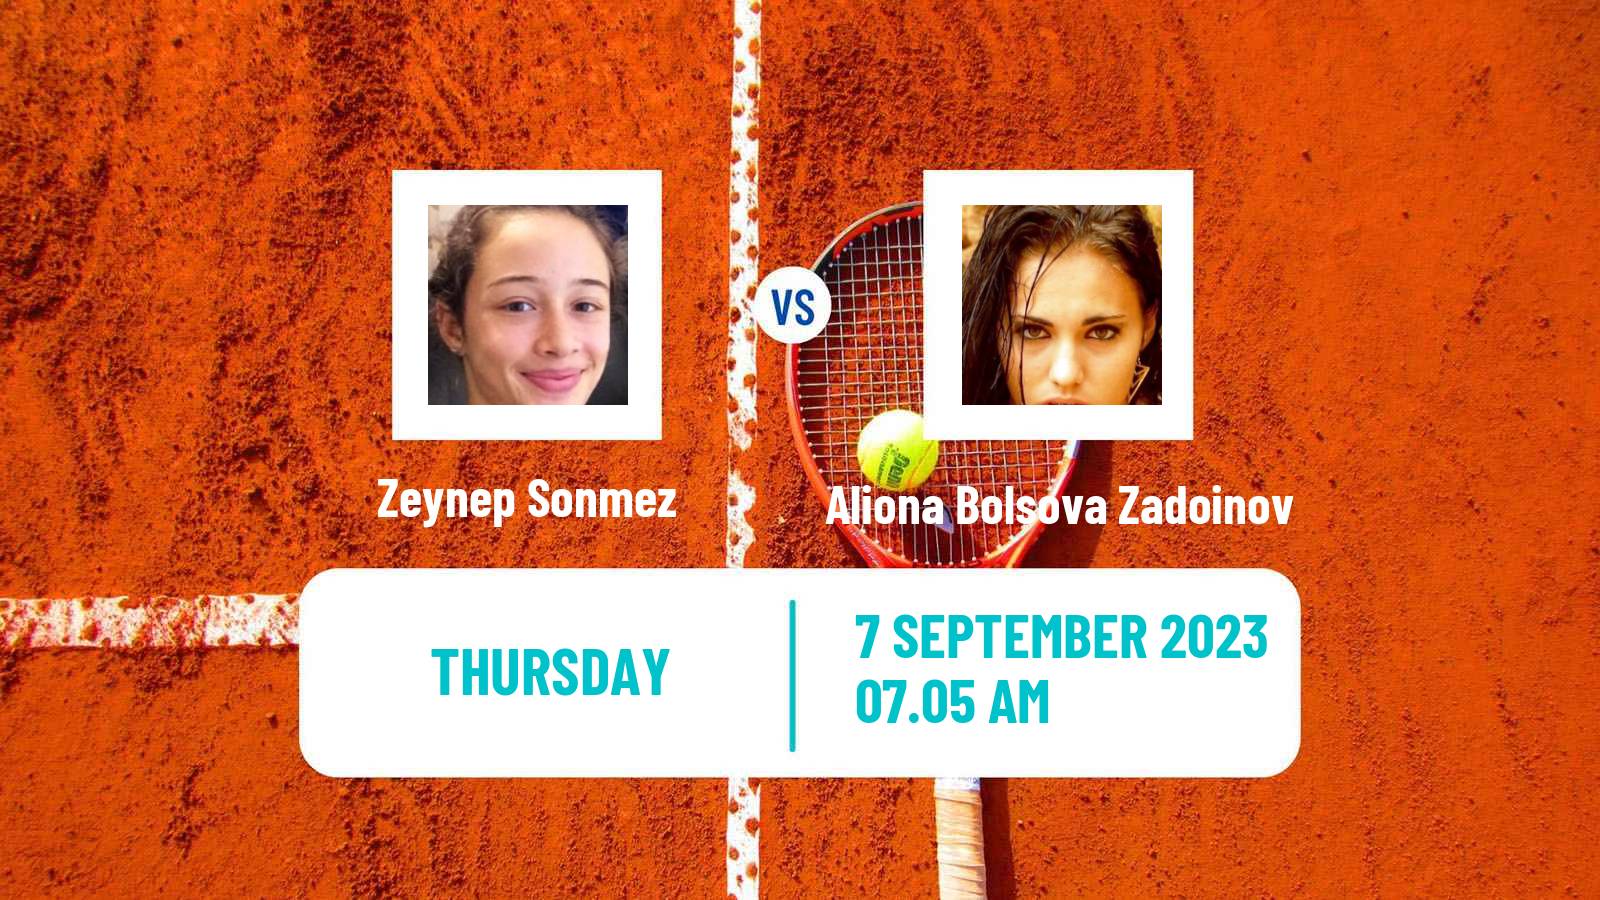 Tennis Bari Challenger Women Zeynep Sonmez - Aliona Bolsova Zadoinov